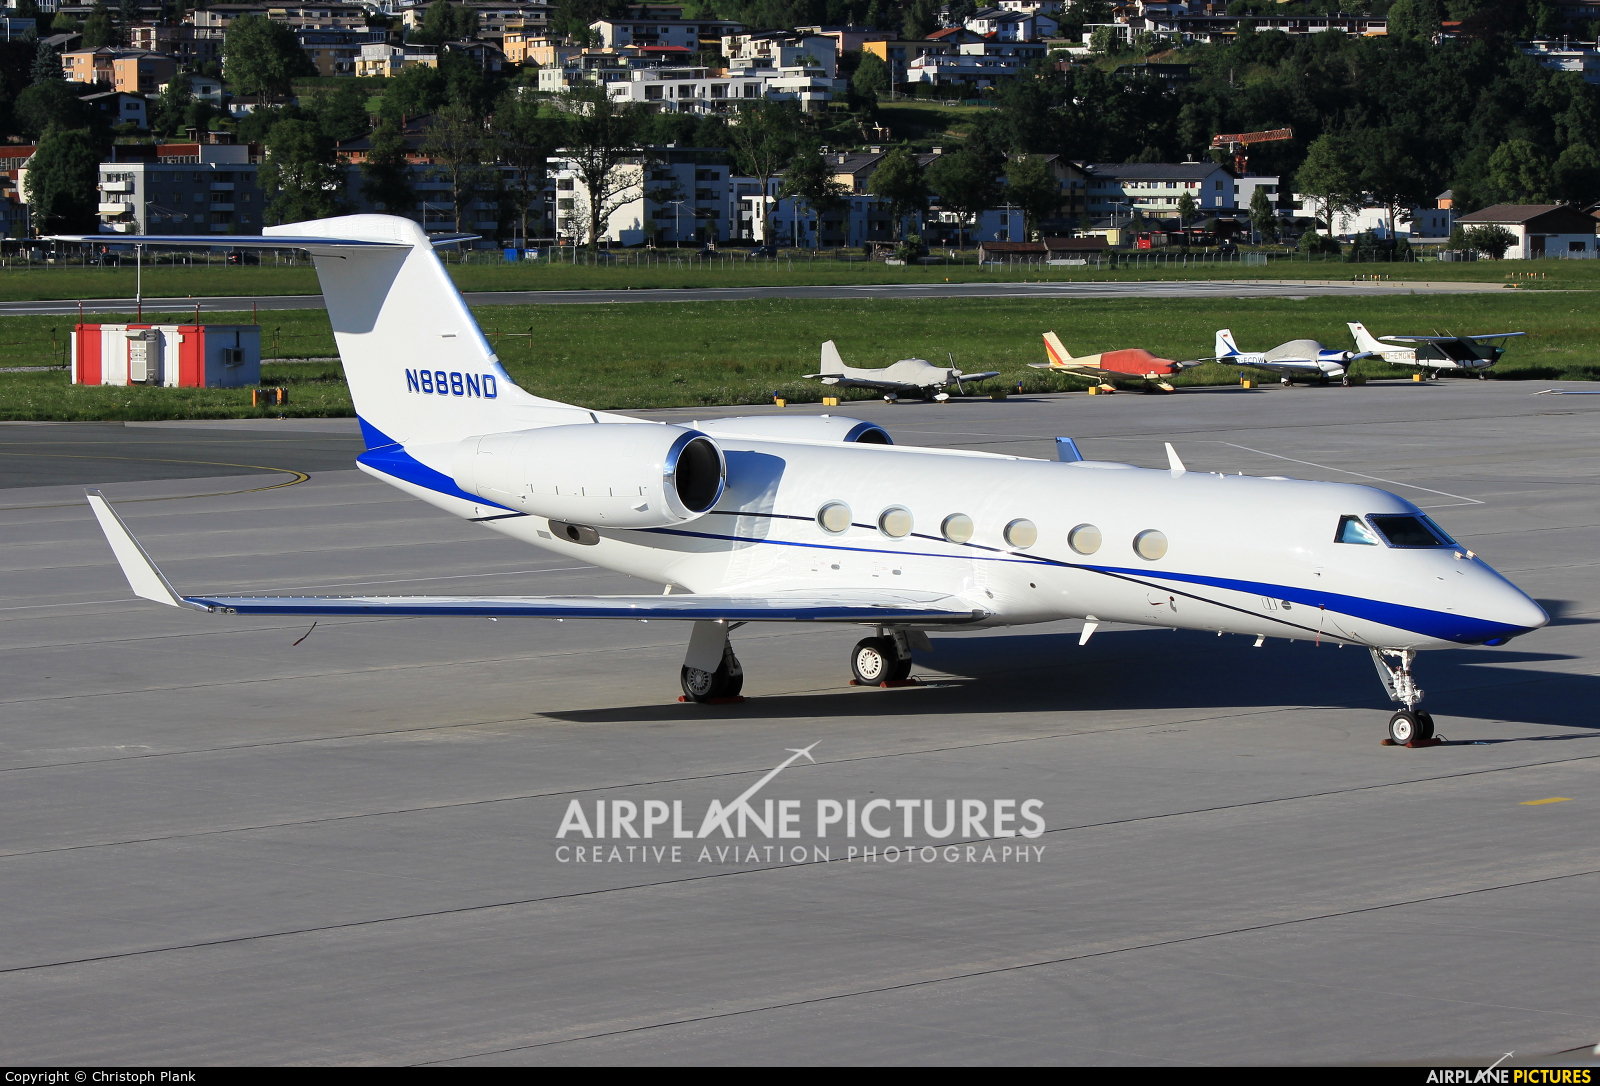 NPM Equipment Leasing LLC N888ND aircraft at Innsbruck